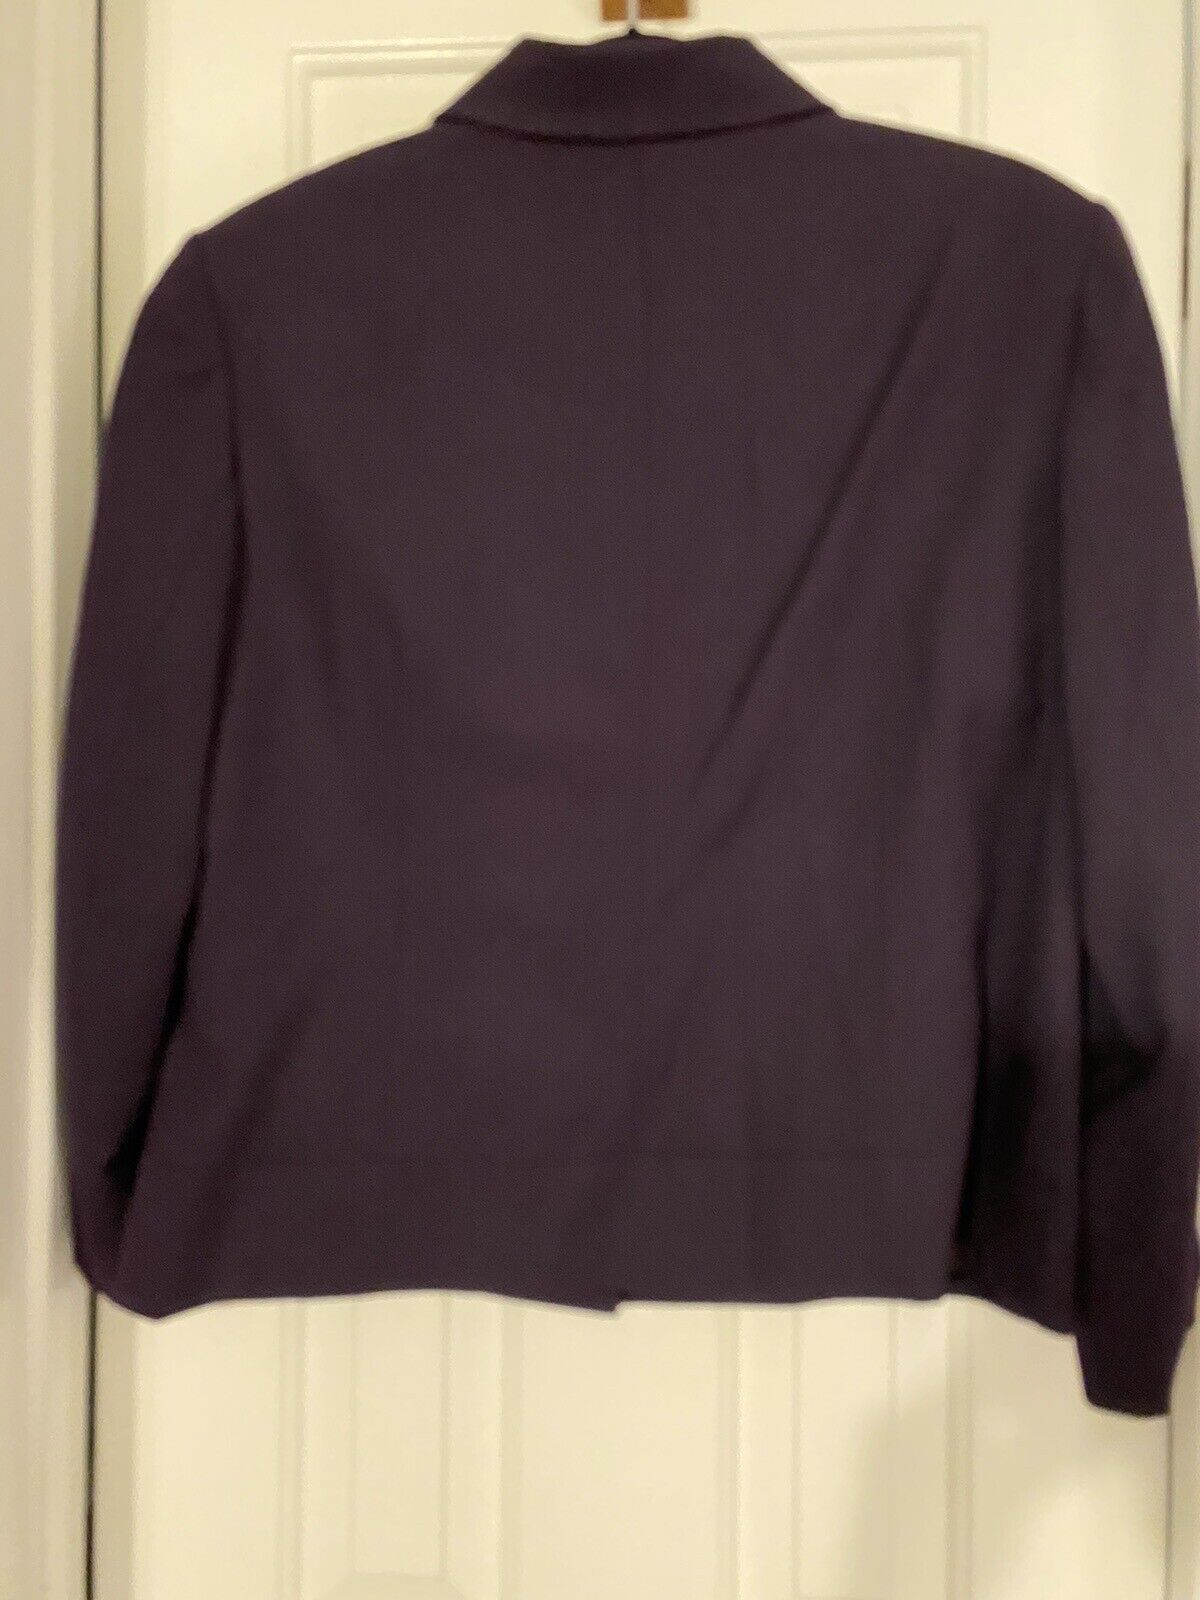 Talbots Petite Size 16 Dark Purple Skirt Suit - image 2